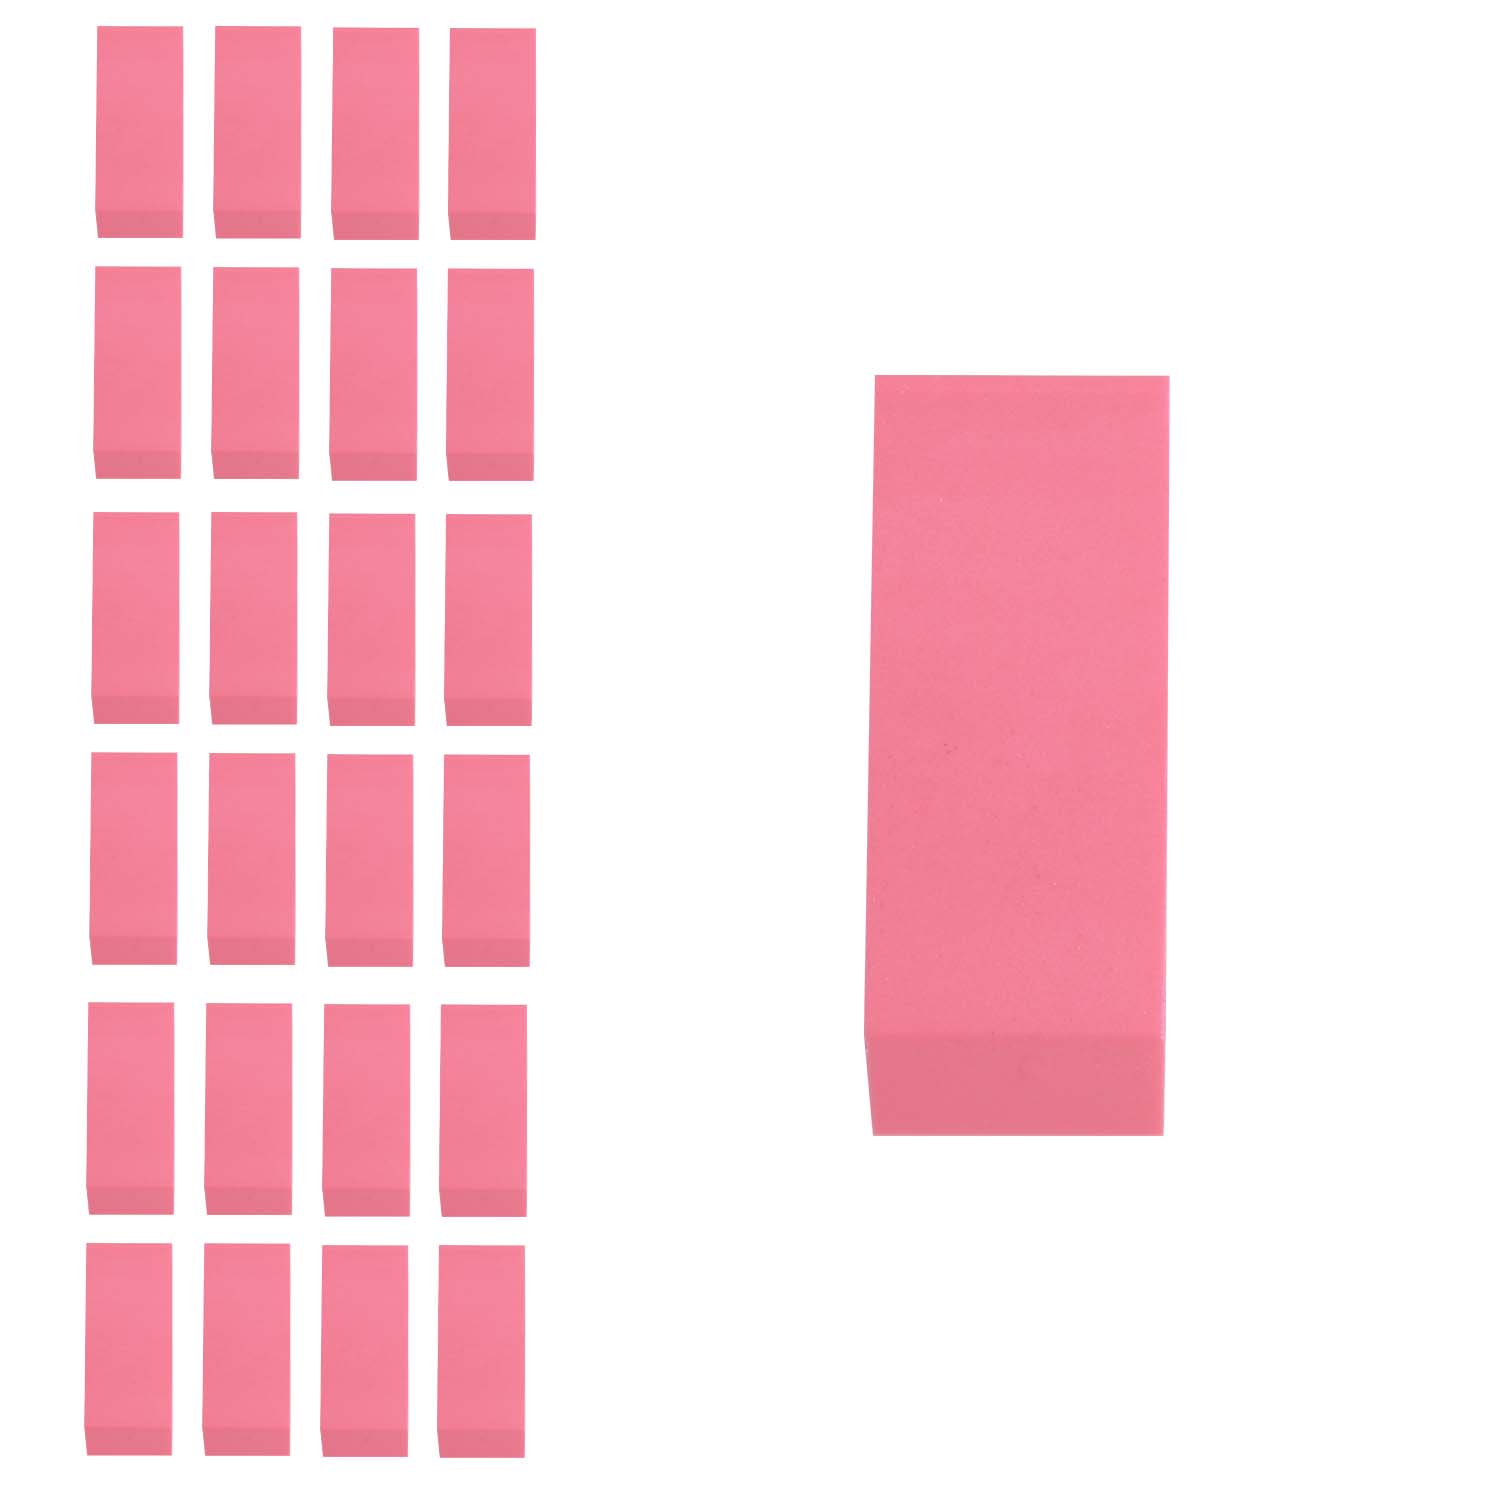 Buy 96 Eraser Wedges - Bulk School Supplies Wholesale Case of 96 Erasers